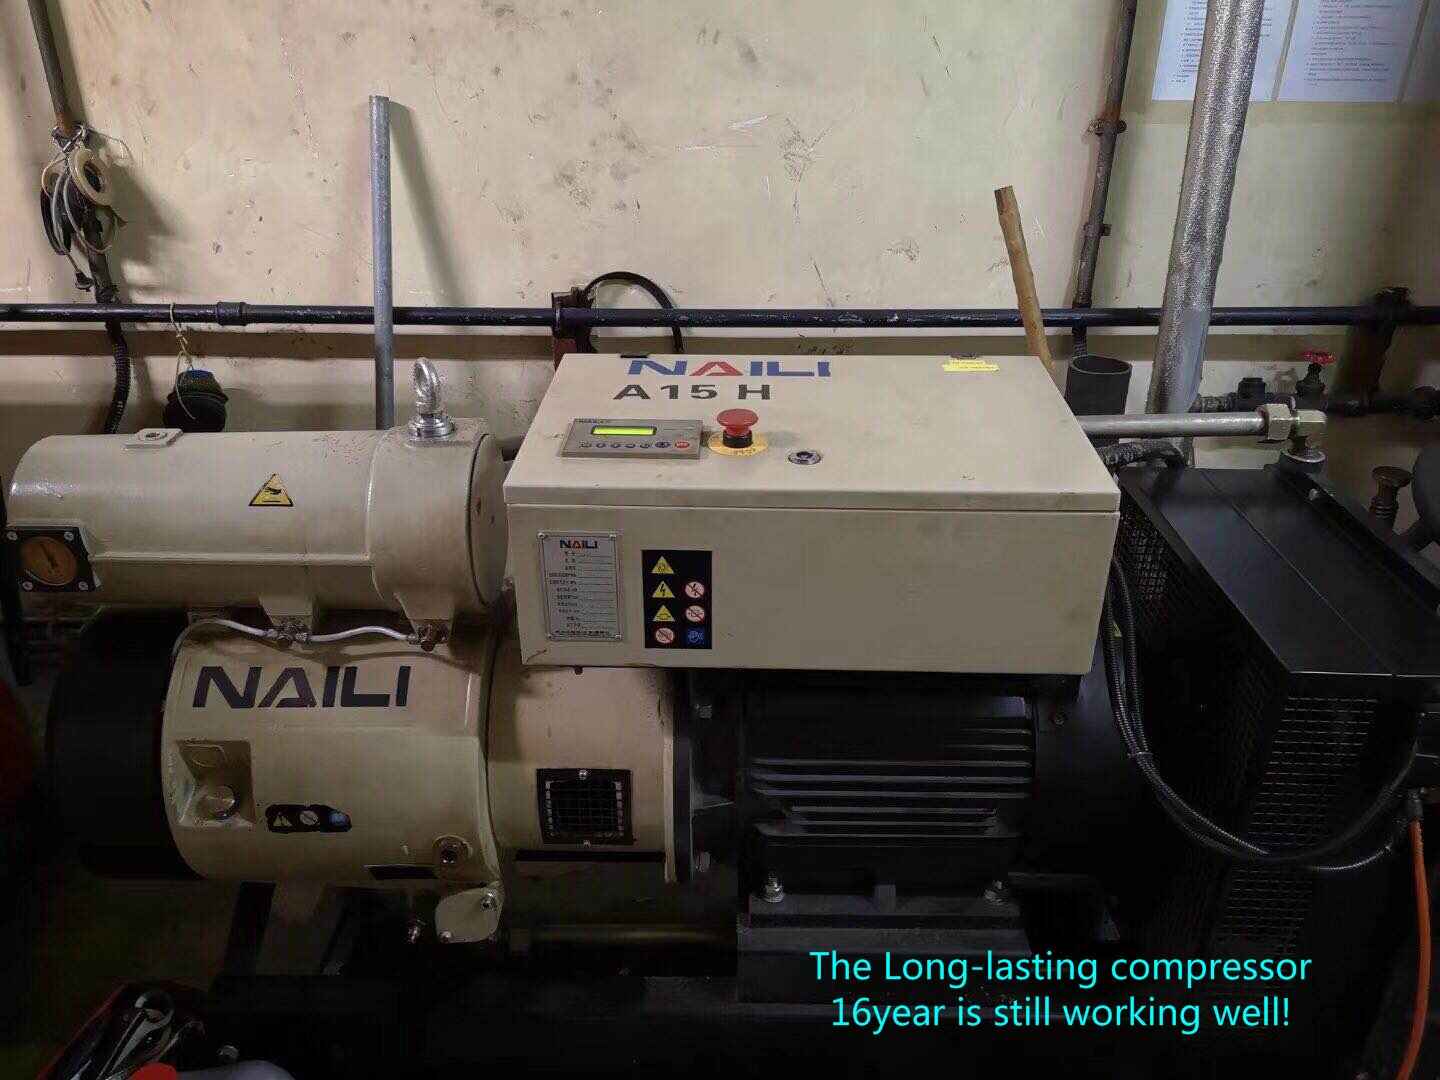 NAILI Vane compressor for The Long-lasting working life